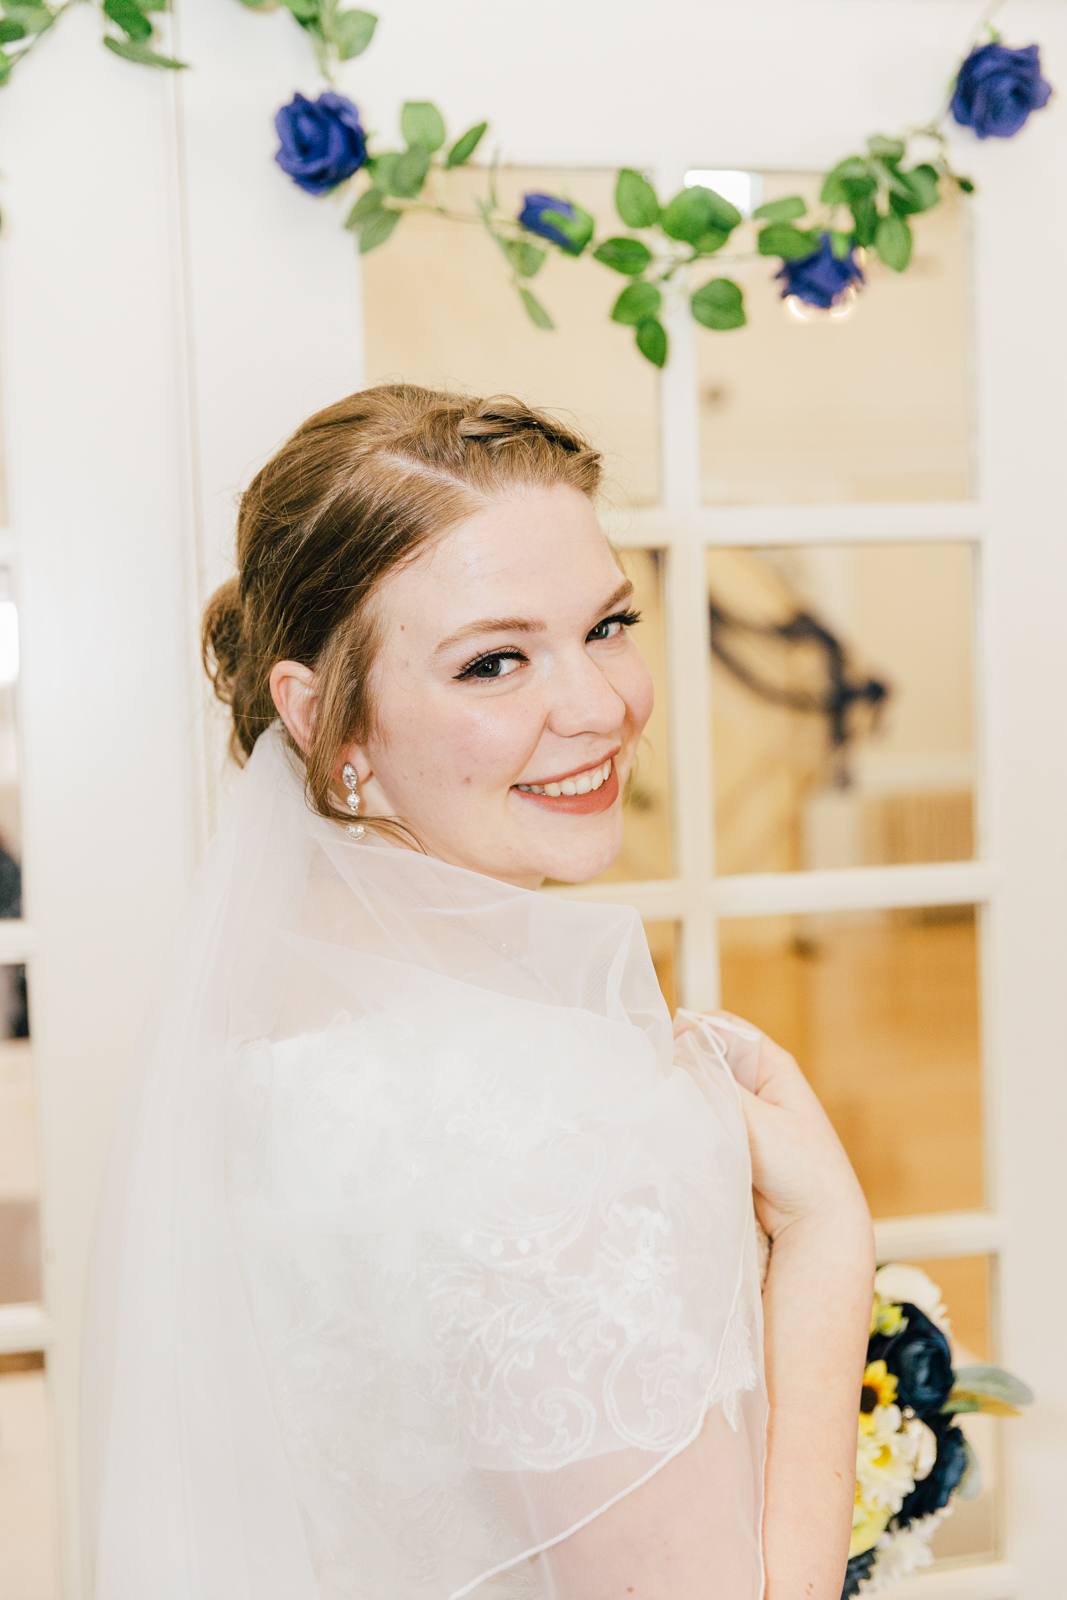 Jackson Hole wedding photographer capturesbride looking over shoulder